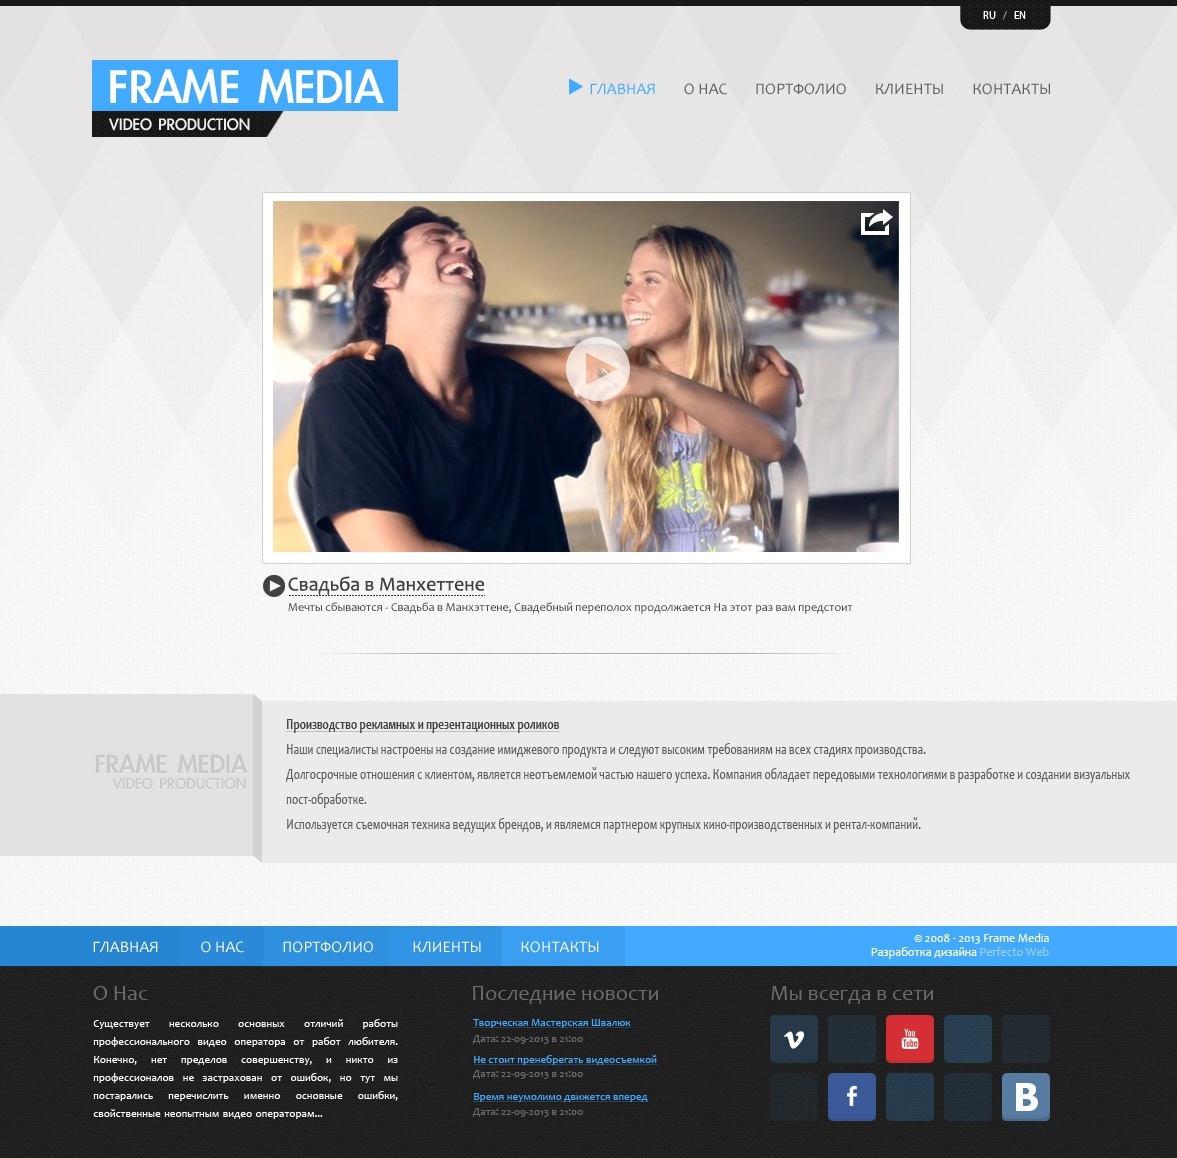 Frame Media №1- Home page